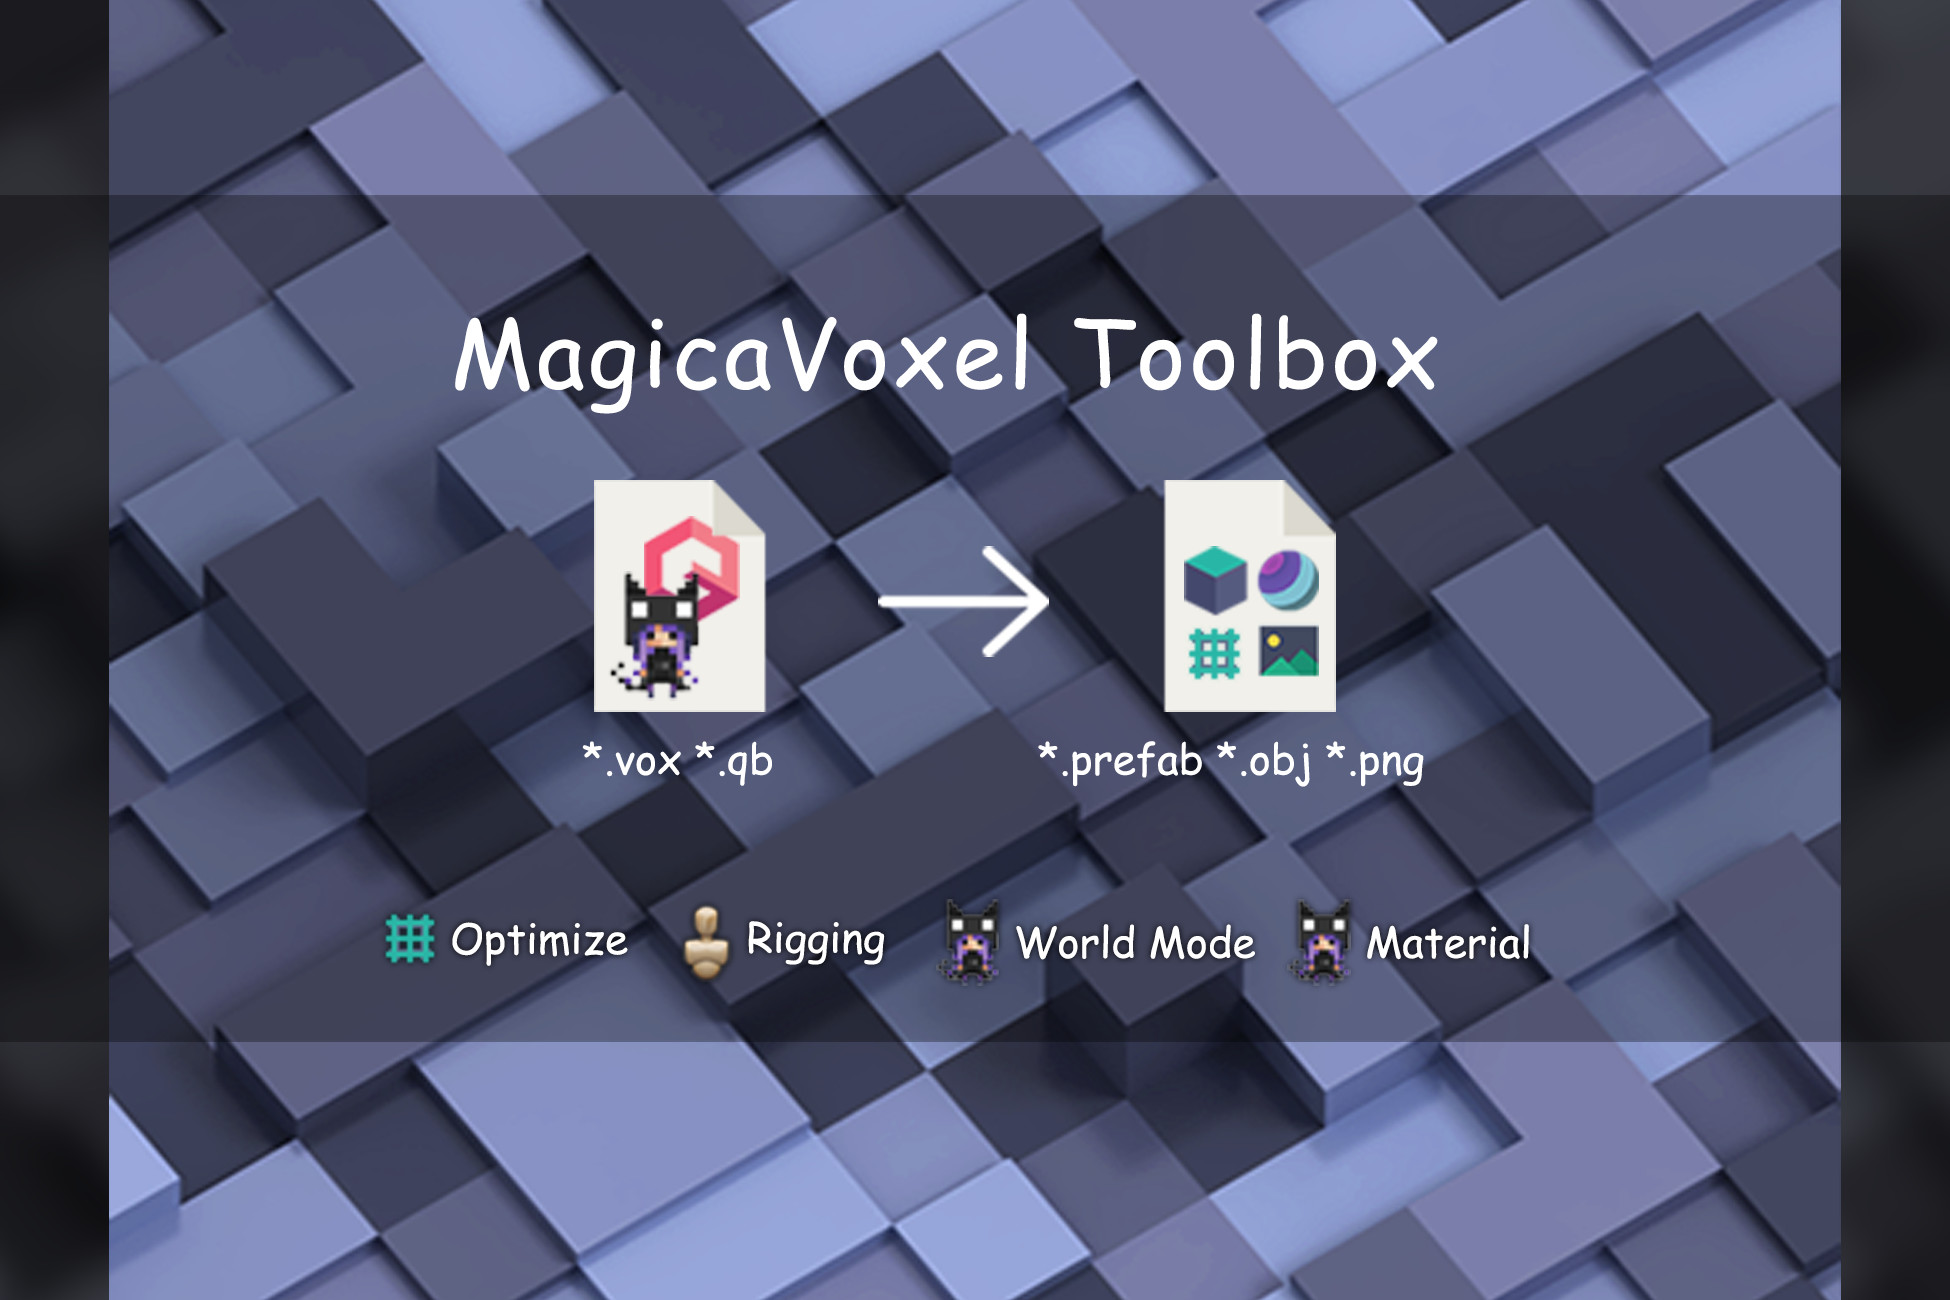 troxel vs magicavoxel